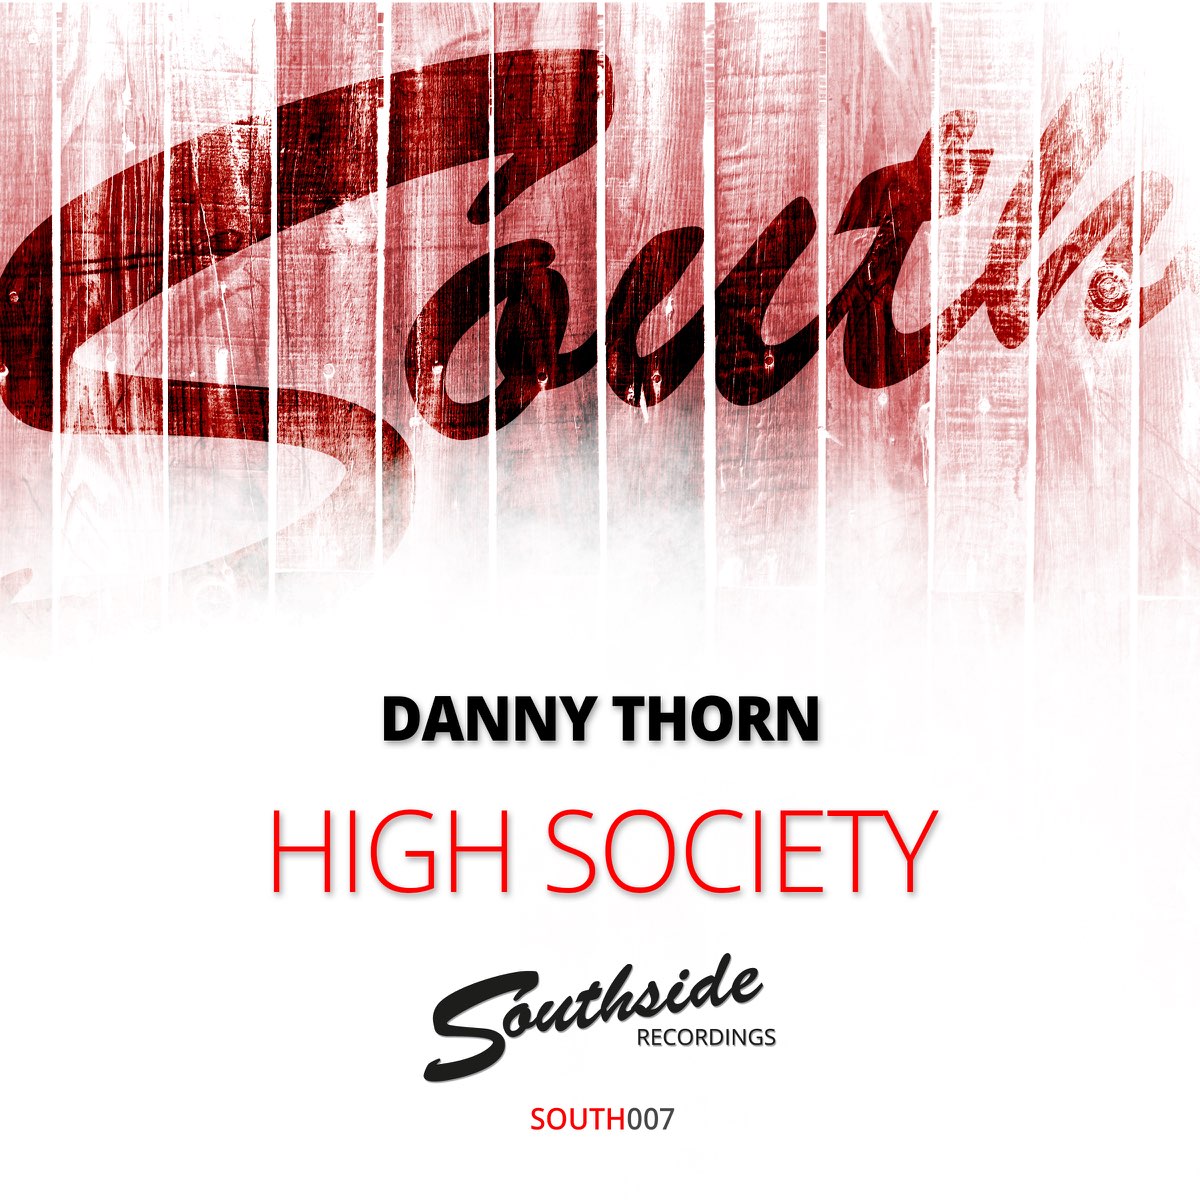 Society text. Thorn песня.